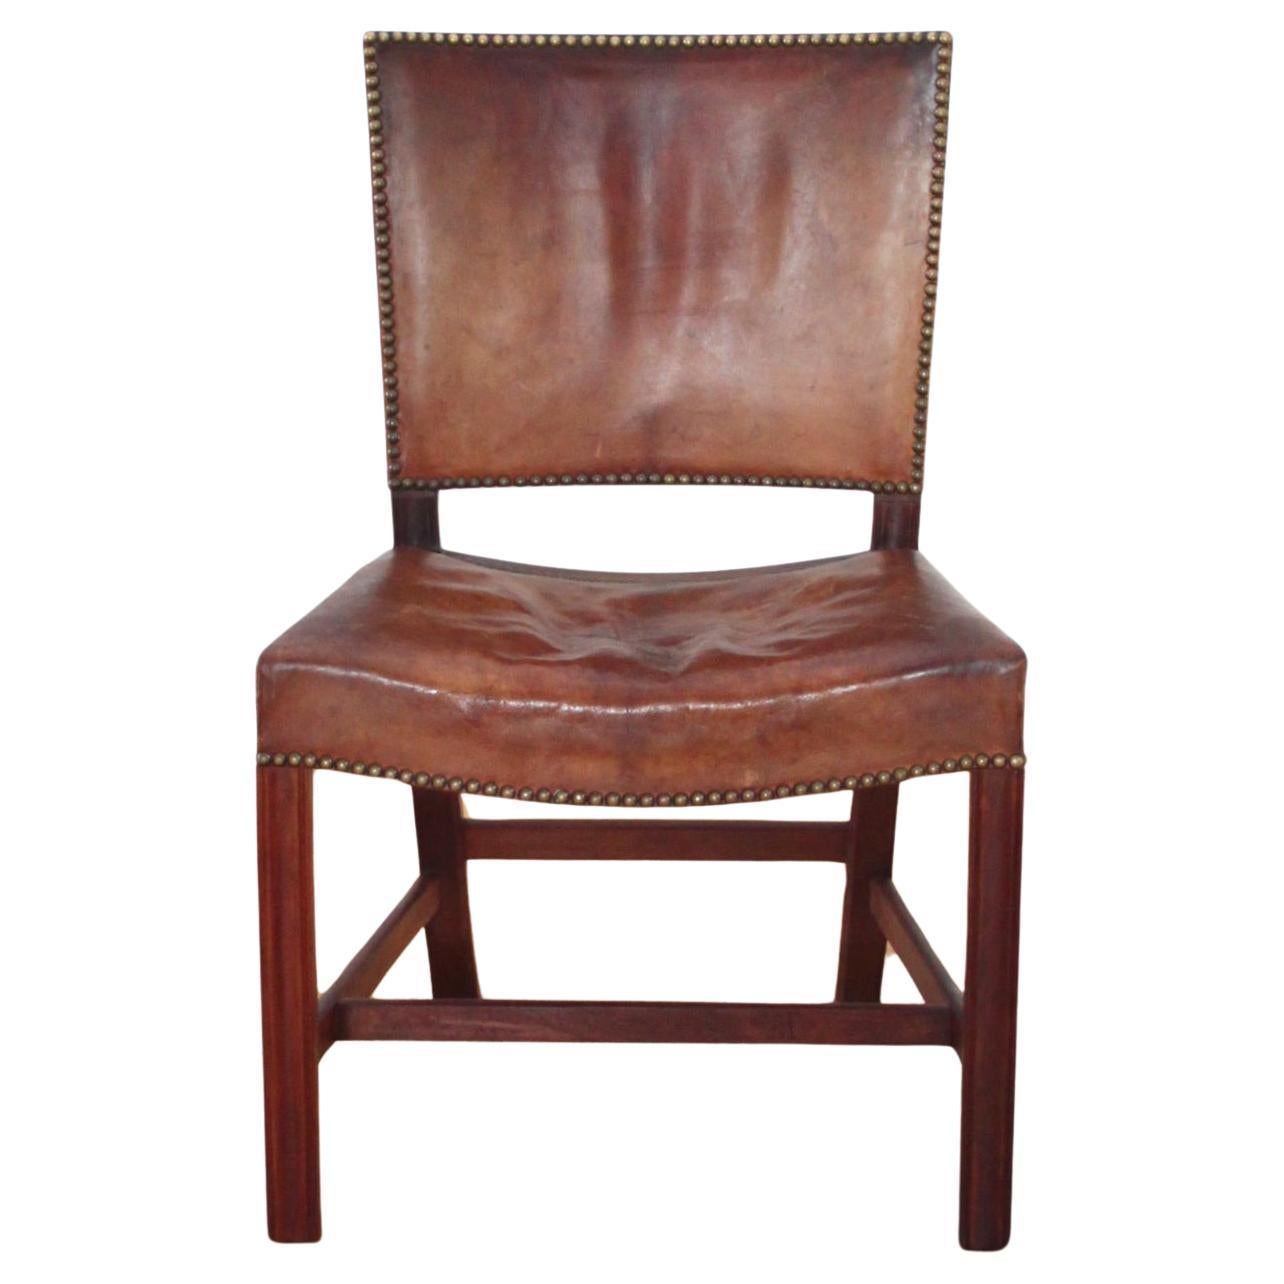 Kaare Klint Roter Stuhl, Rud Rasmussen, Original Niger Leder und Mahagoni-Rahmen